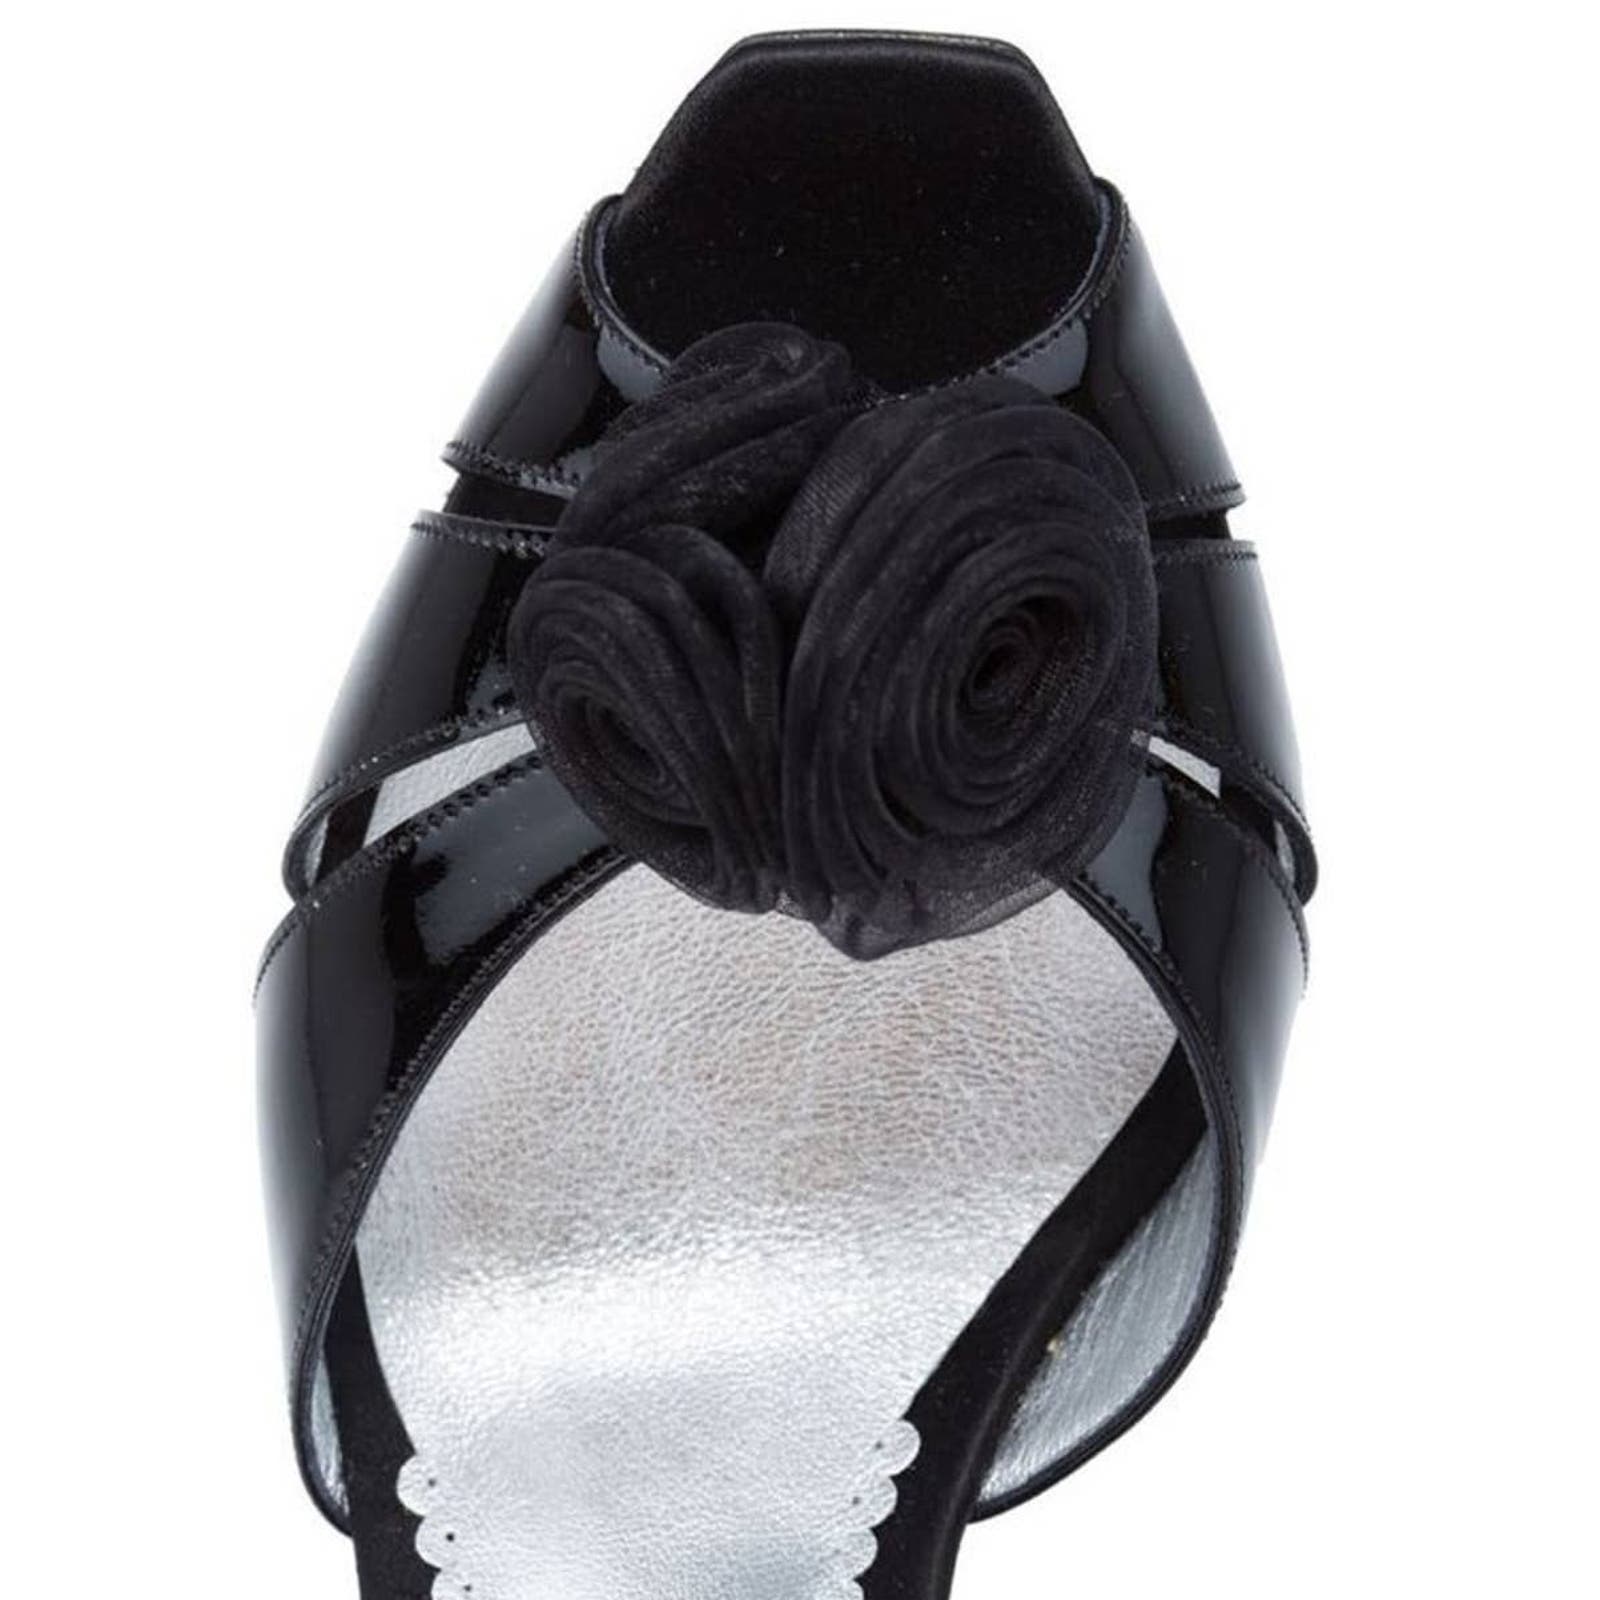 Giorgio Armani Women US 9 Black Leather Wedge Heels Peep Toe Pumps Shoes